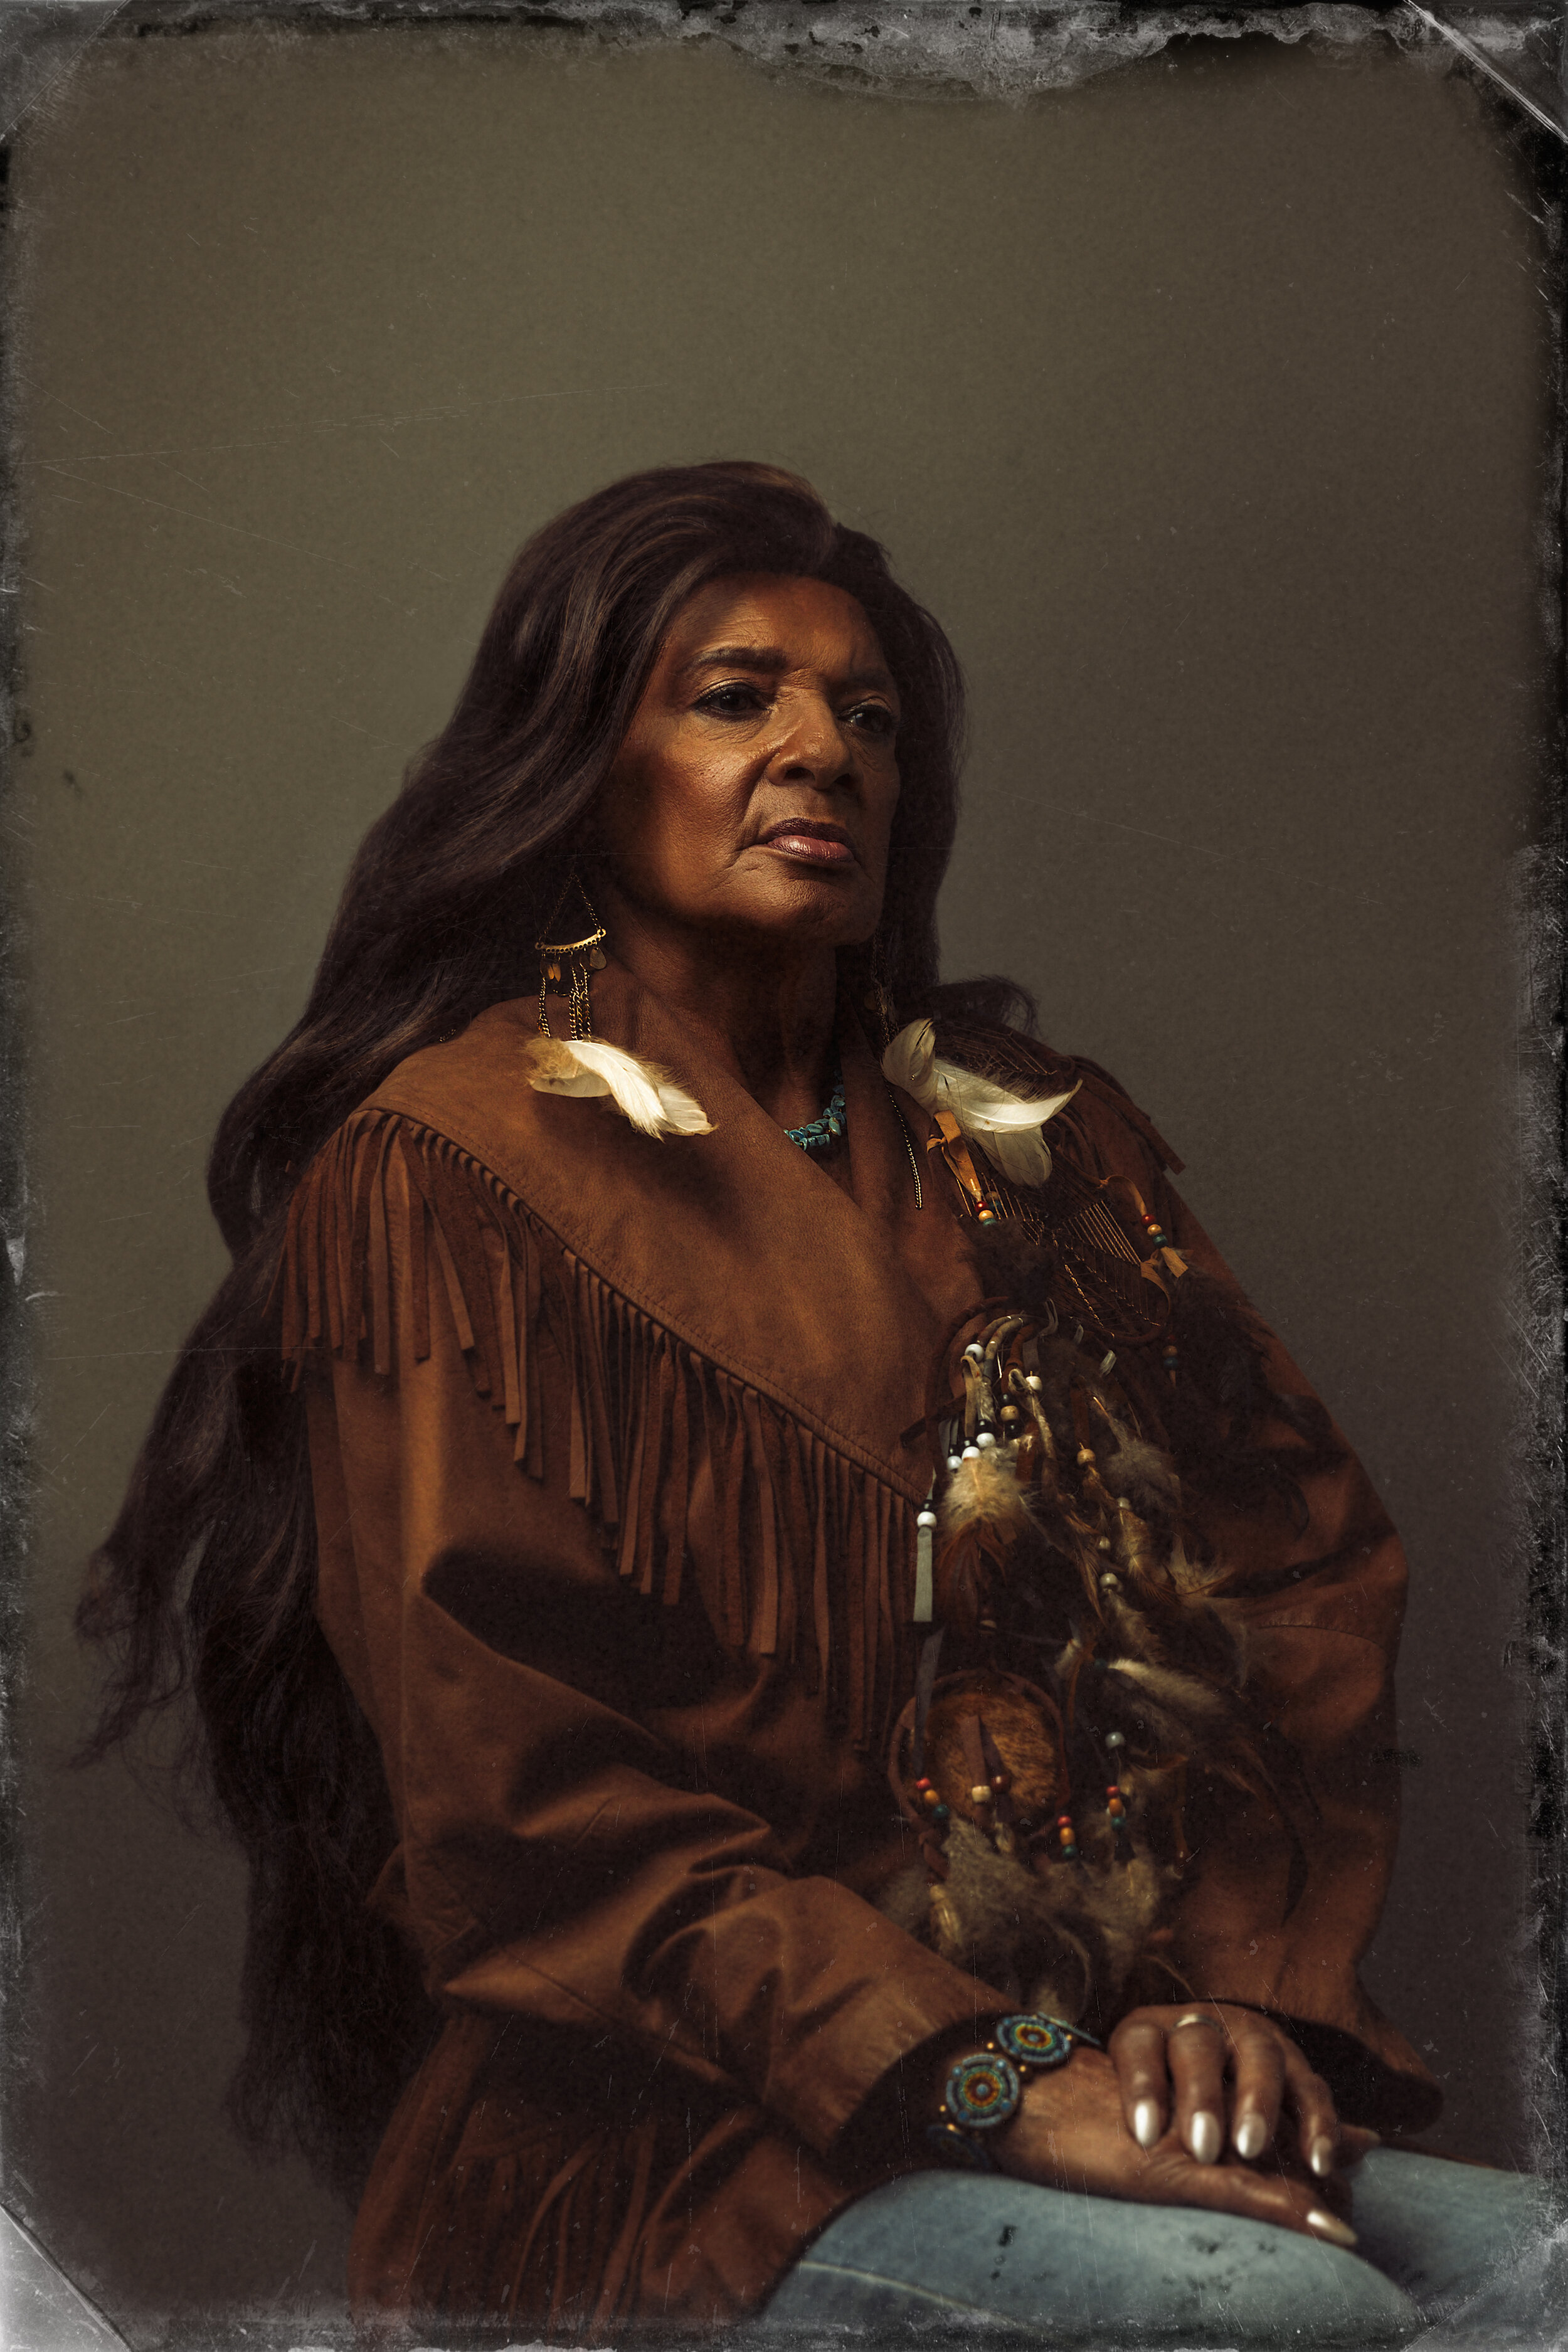 Native American.jpg